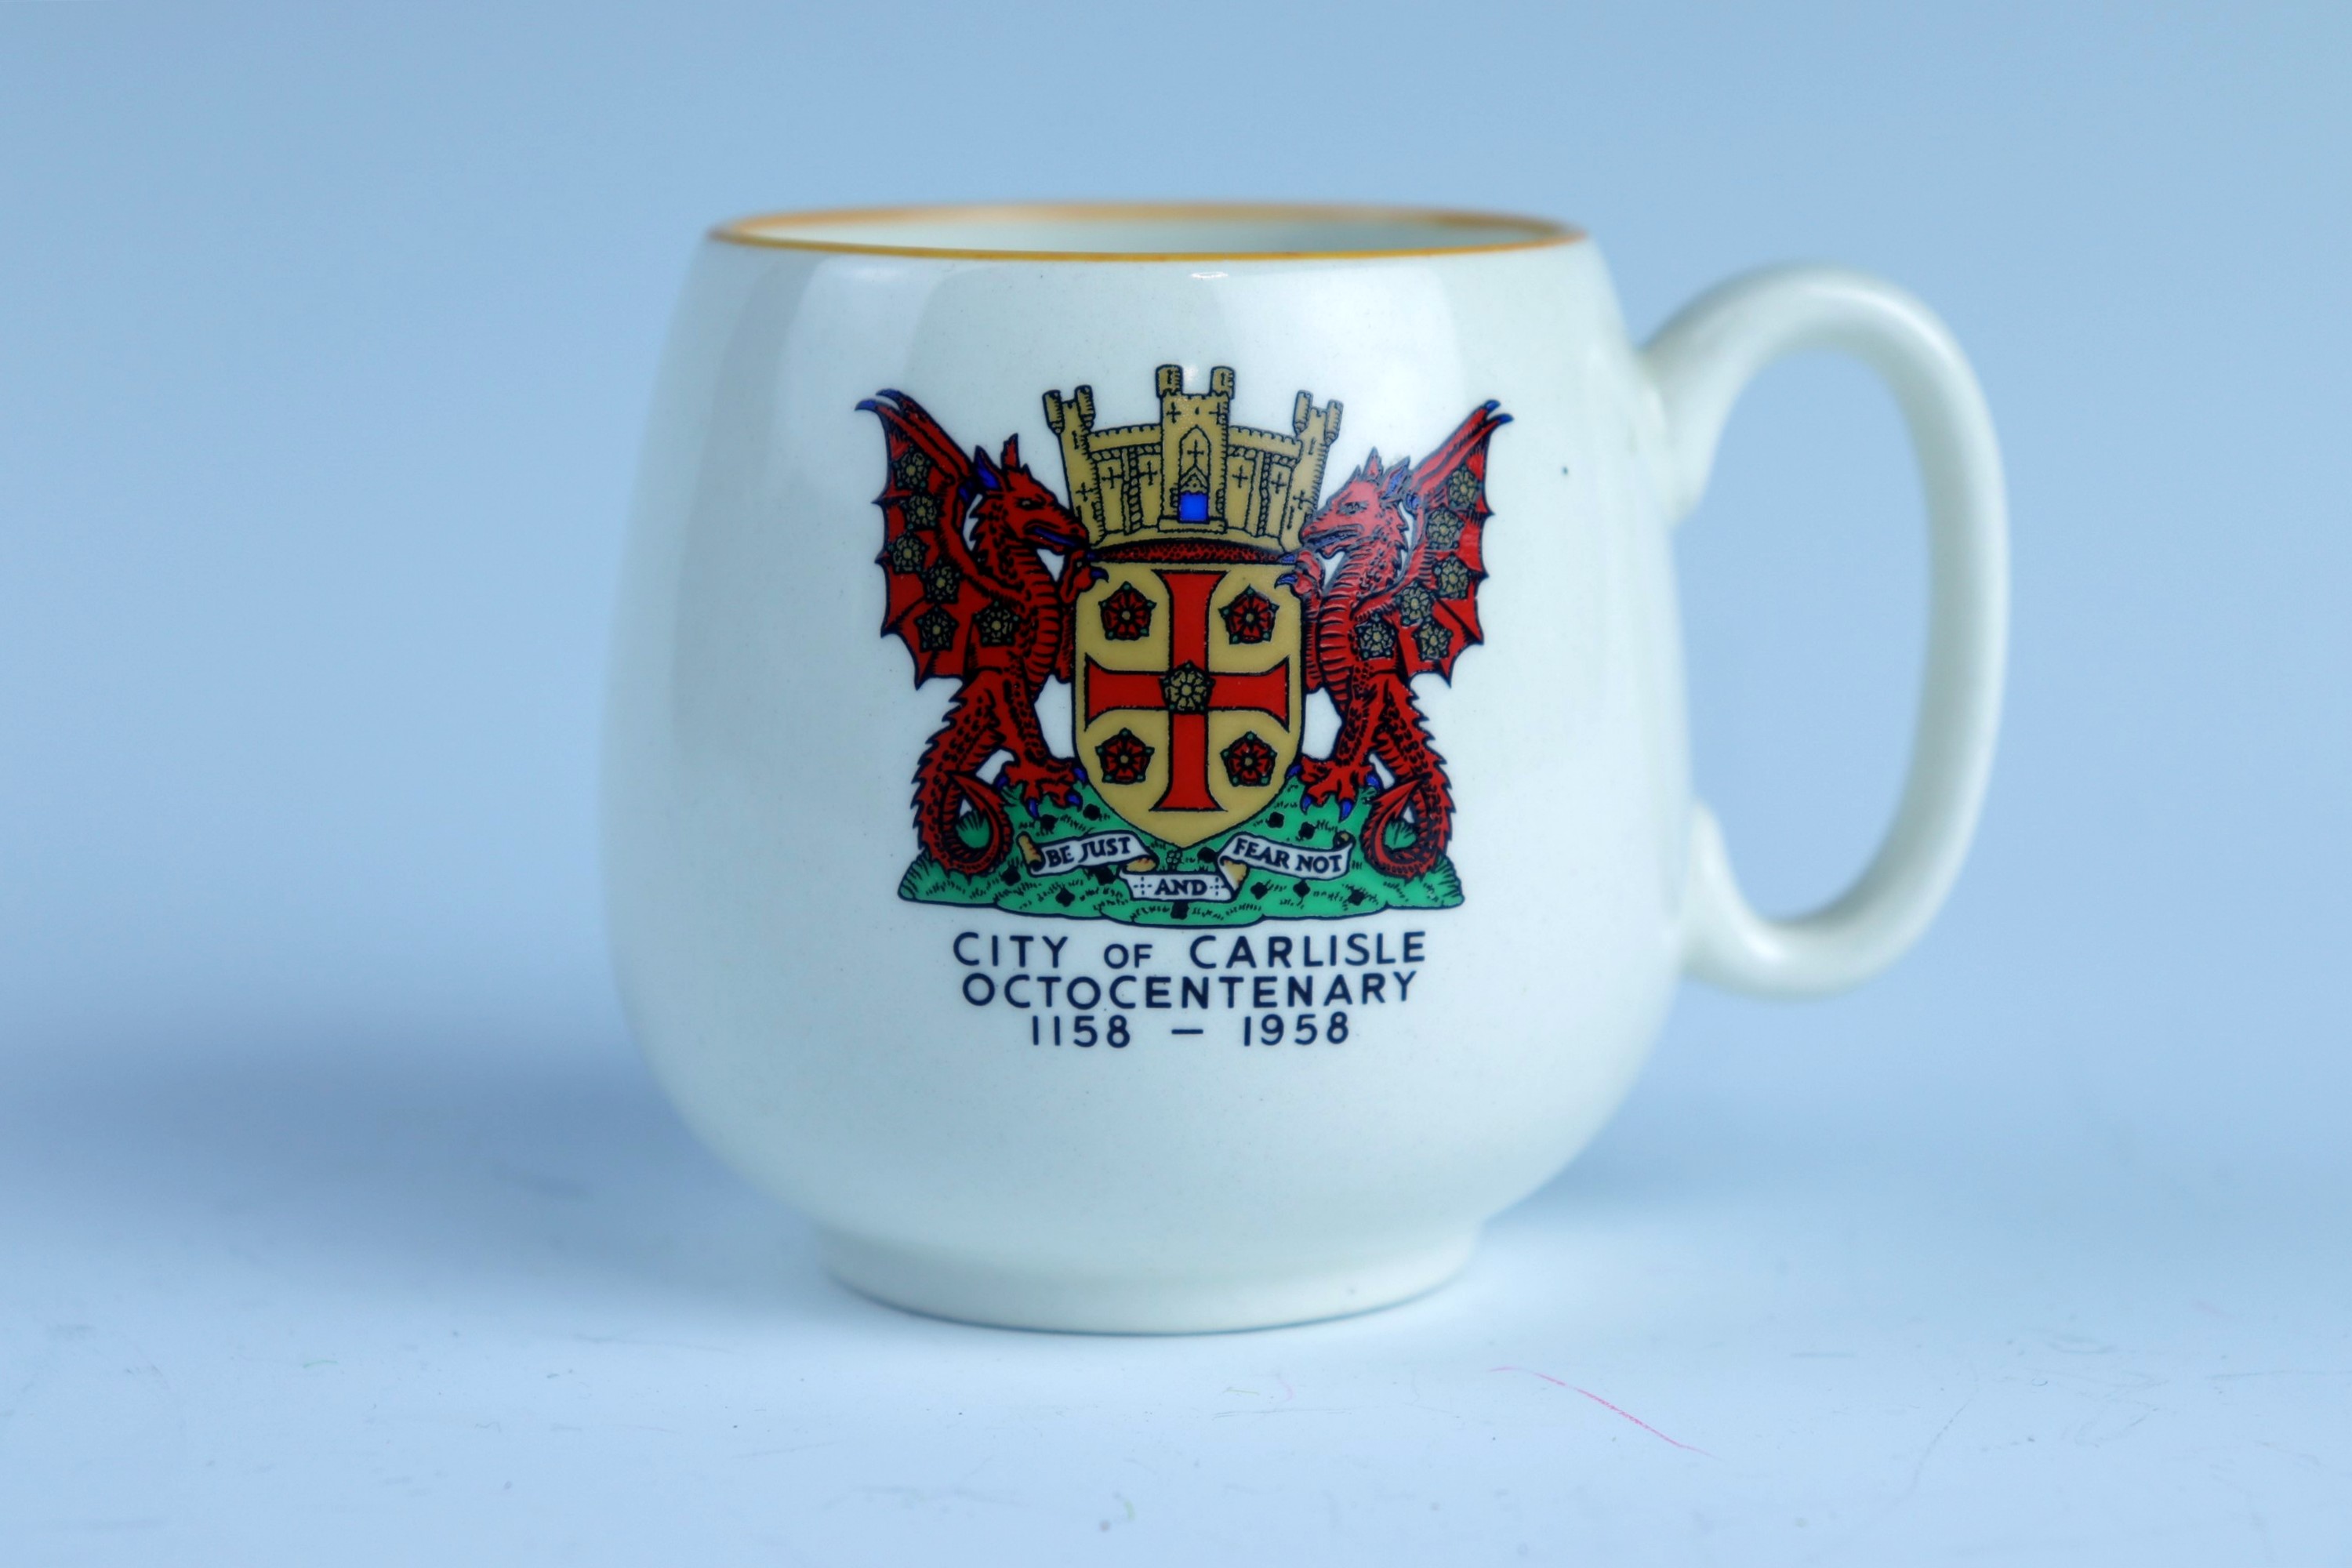 A Gray's Pottery "City of Carlisle Octocentenary 1158-1958" commemorative cup, 7 cm